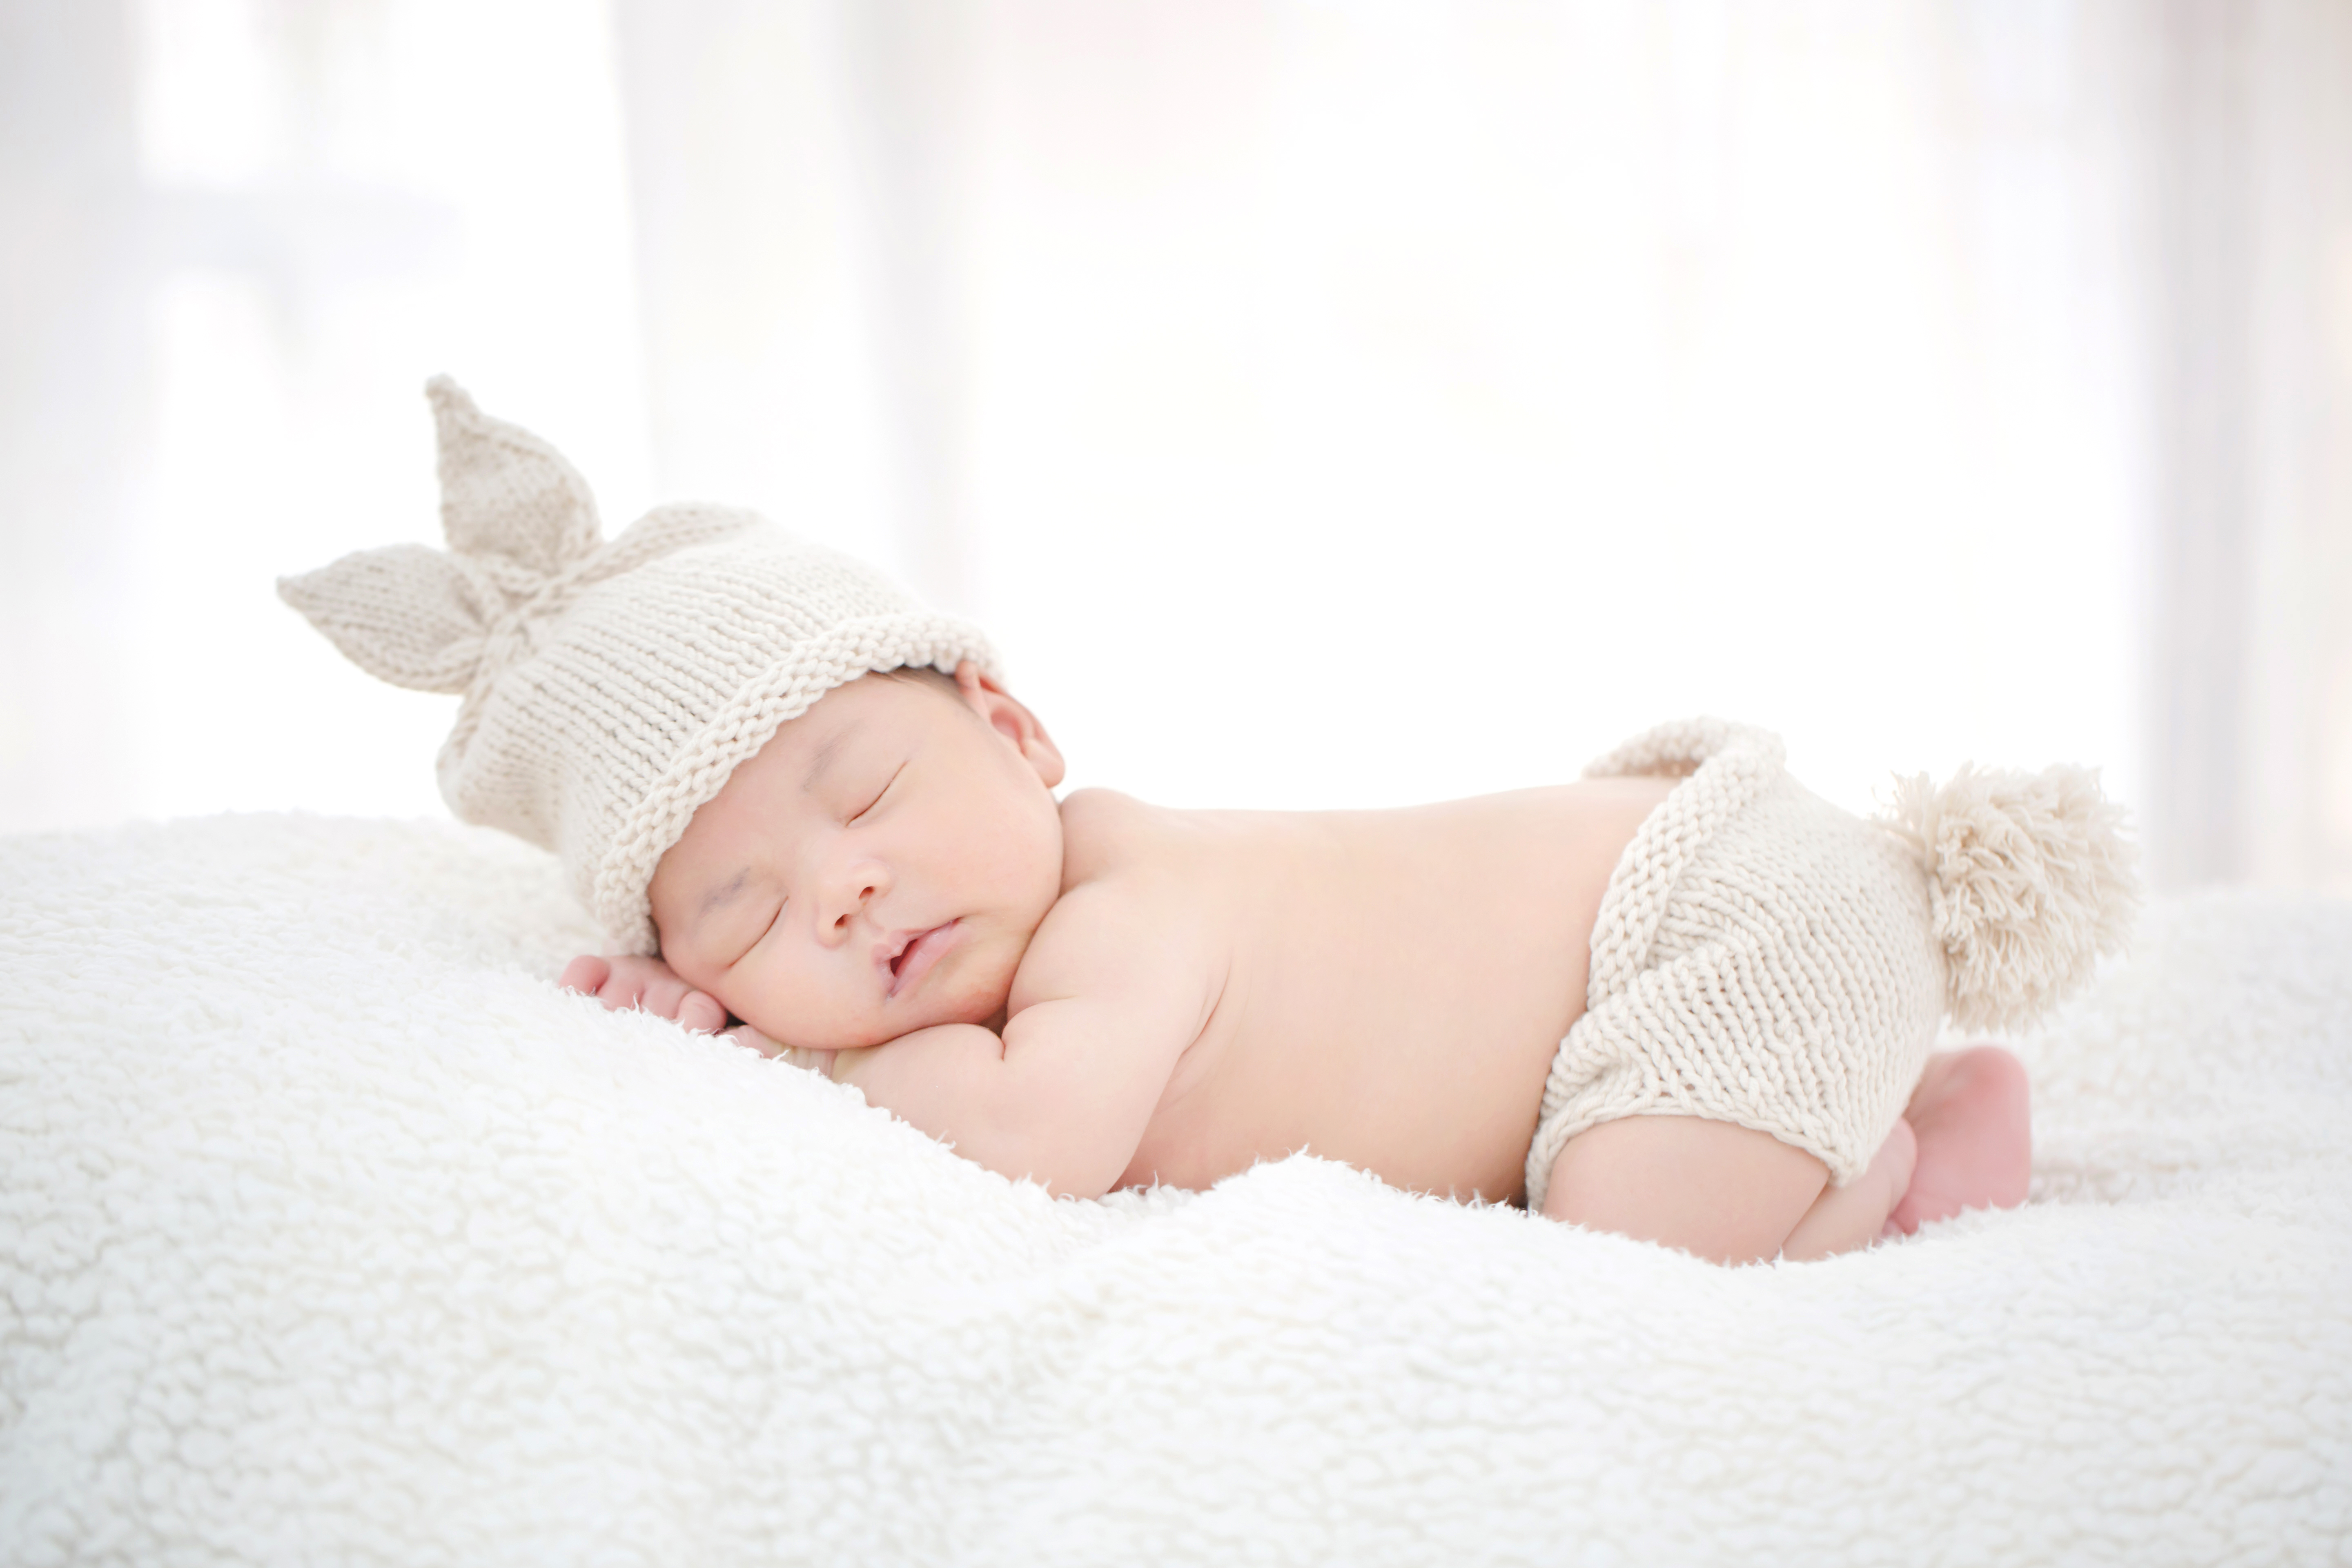 Lovely newborn Asian baby sleeping on furry cloth